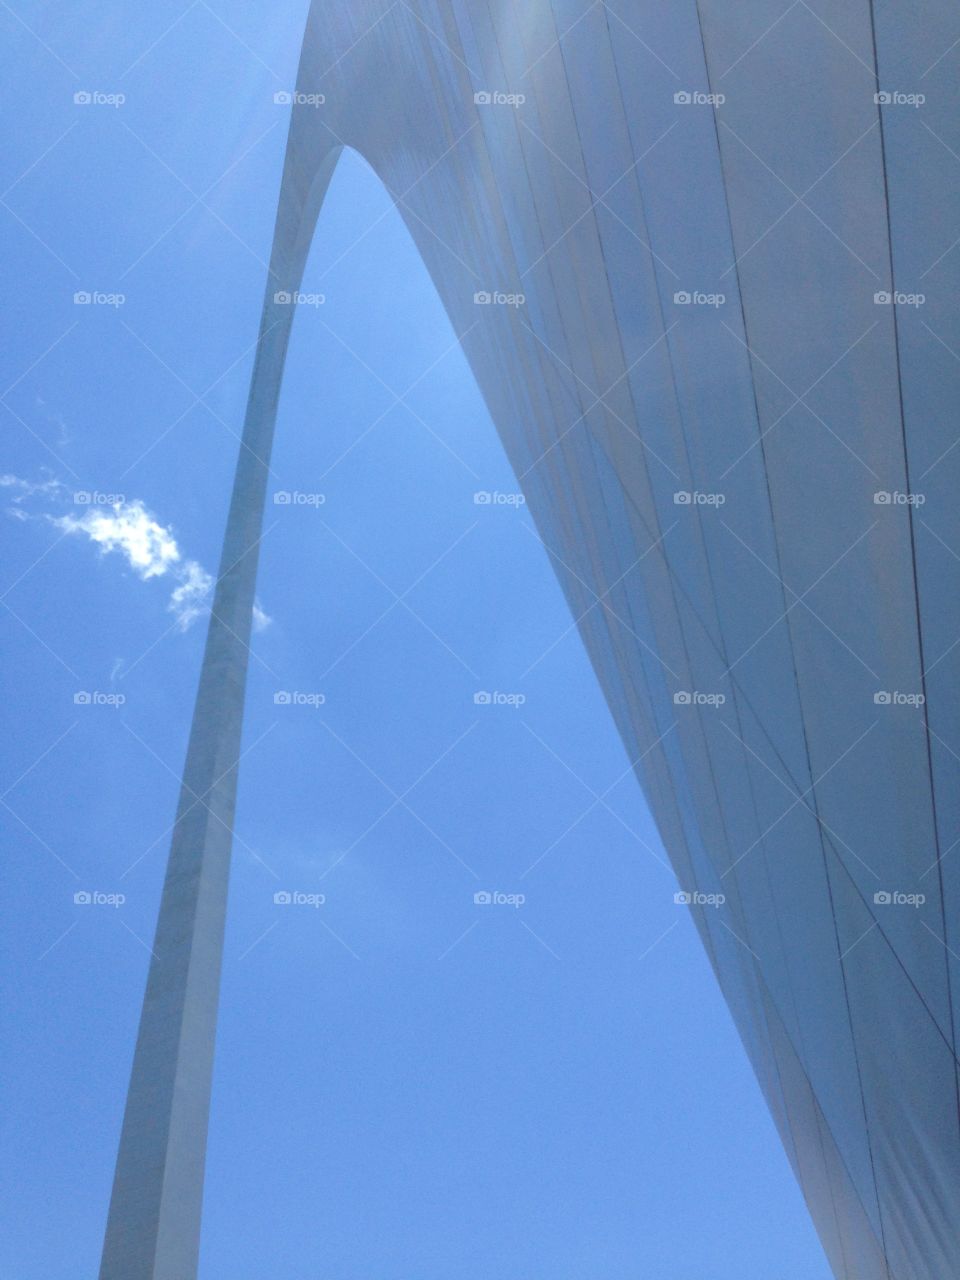 Gateway Arch in St Louis, MO. St Louis Gateway Arch